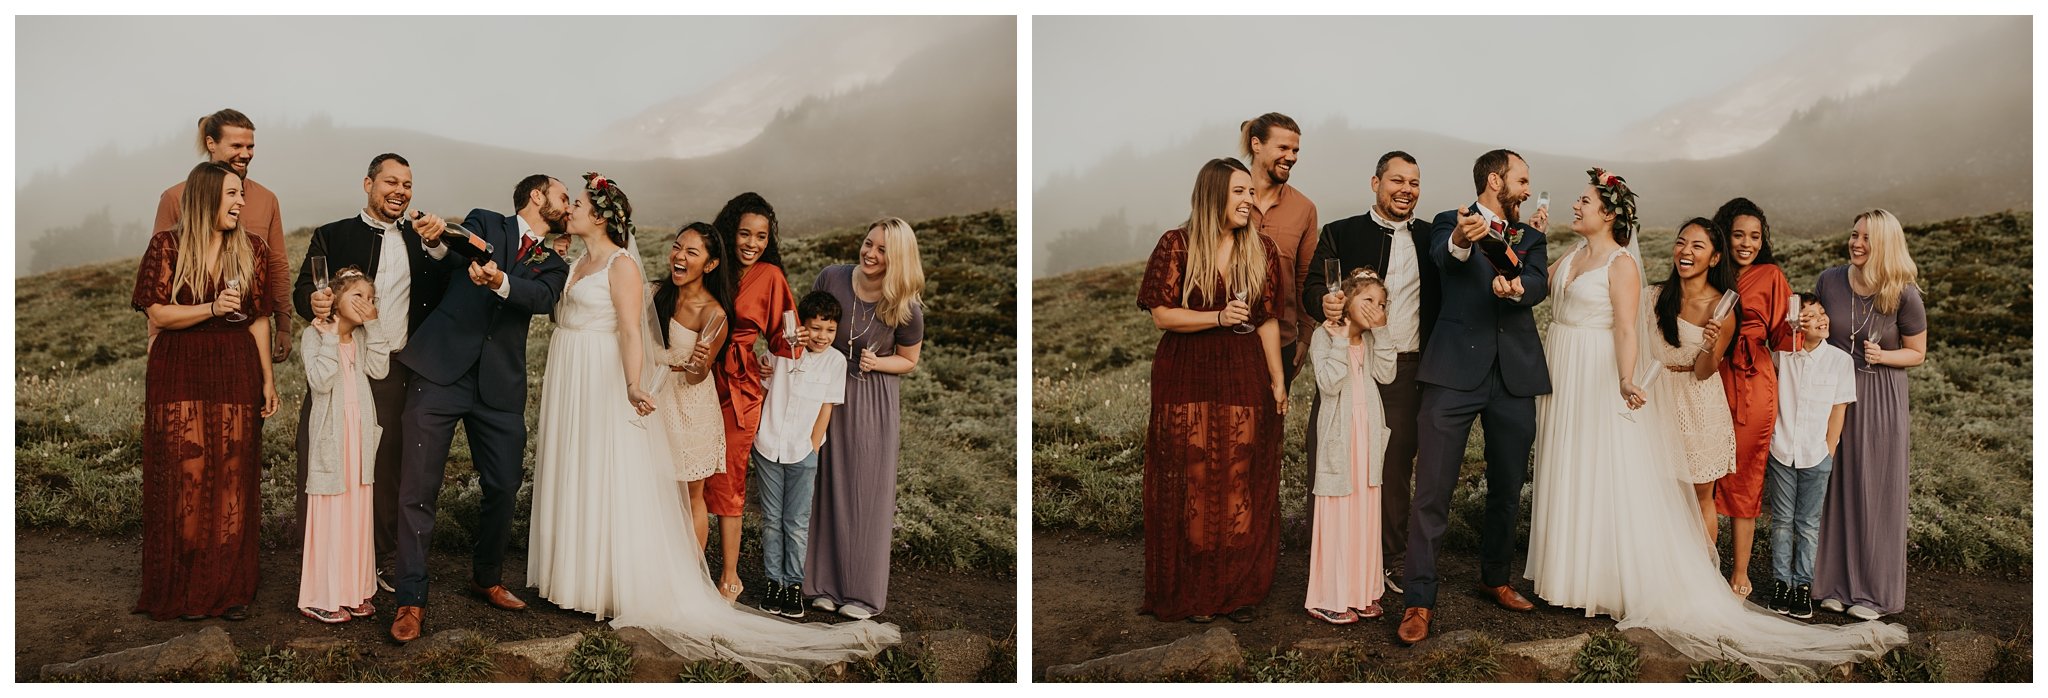 Sarah Gabe Elopement - Mt Rainier, WA - Boise Idaho Family Photographer - Kamra Fuller Photography_0053.jpg